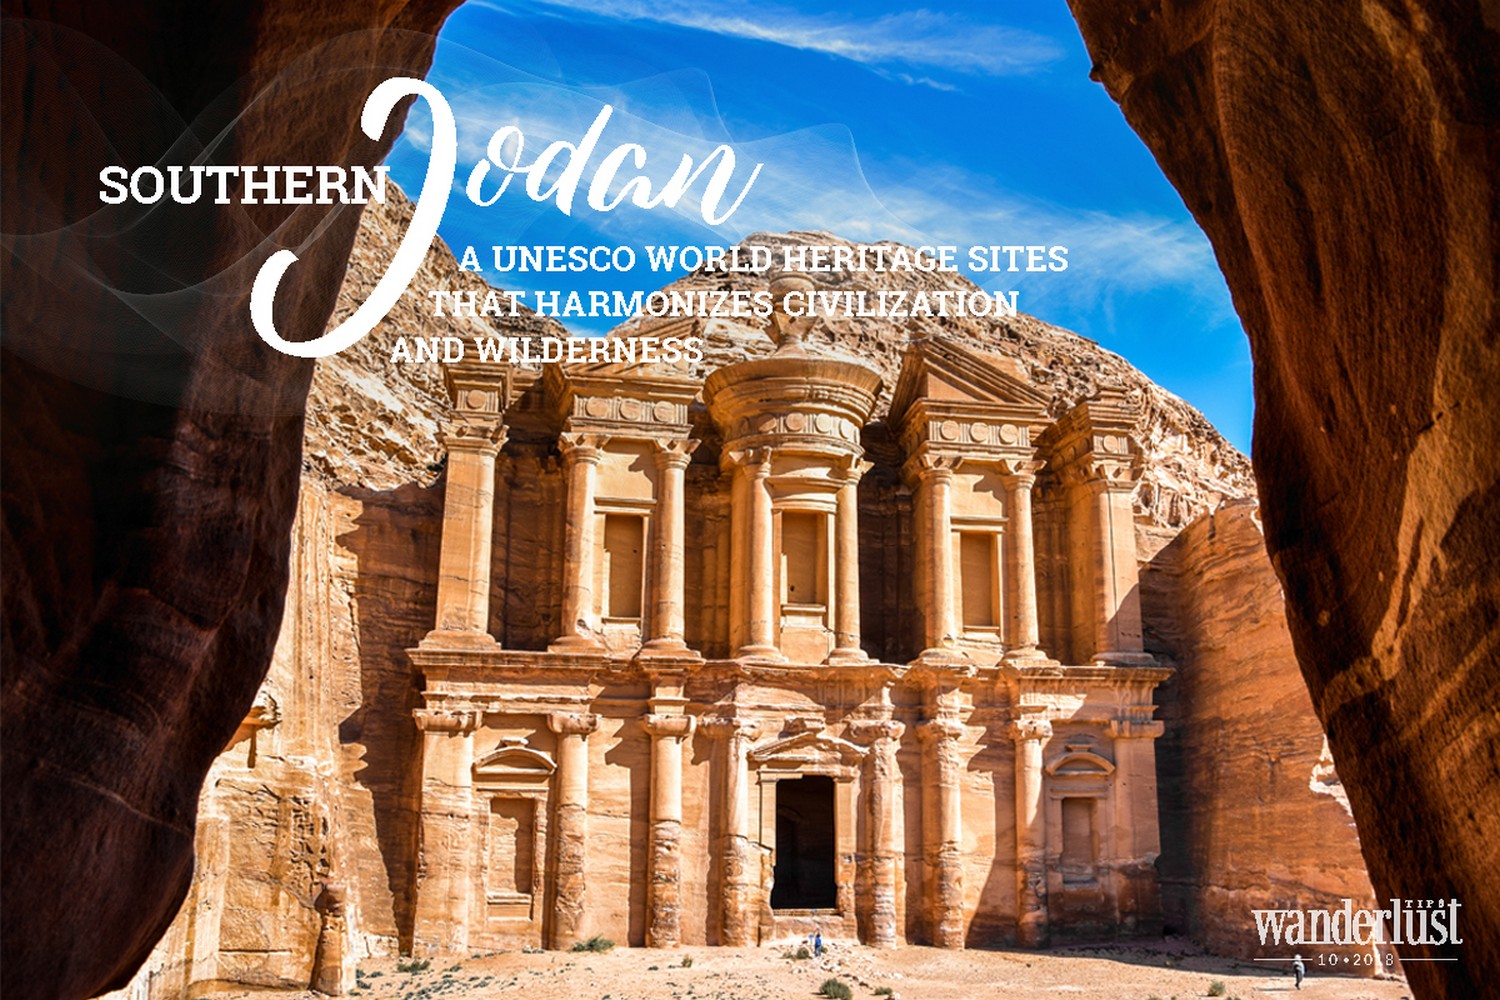 Wanderlust Tips Magazine | Southern Jordan UNESCO world heritage sites that harmonize civilisation and wilderness